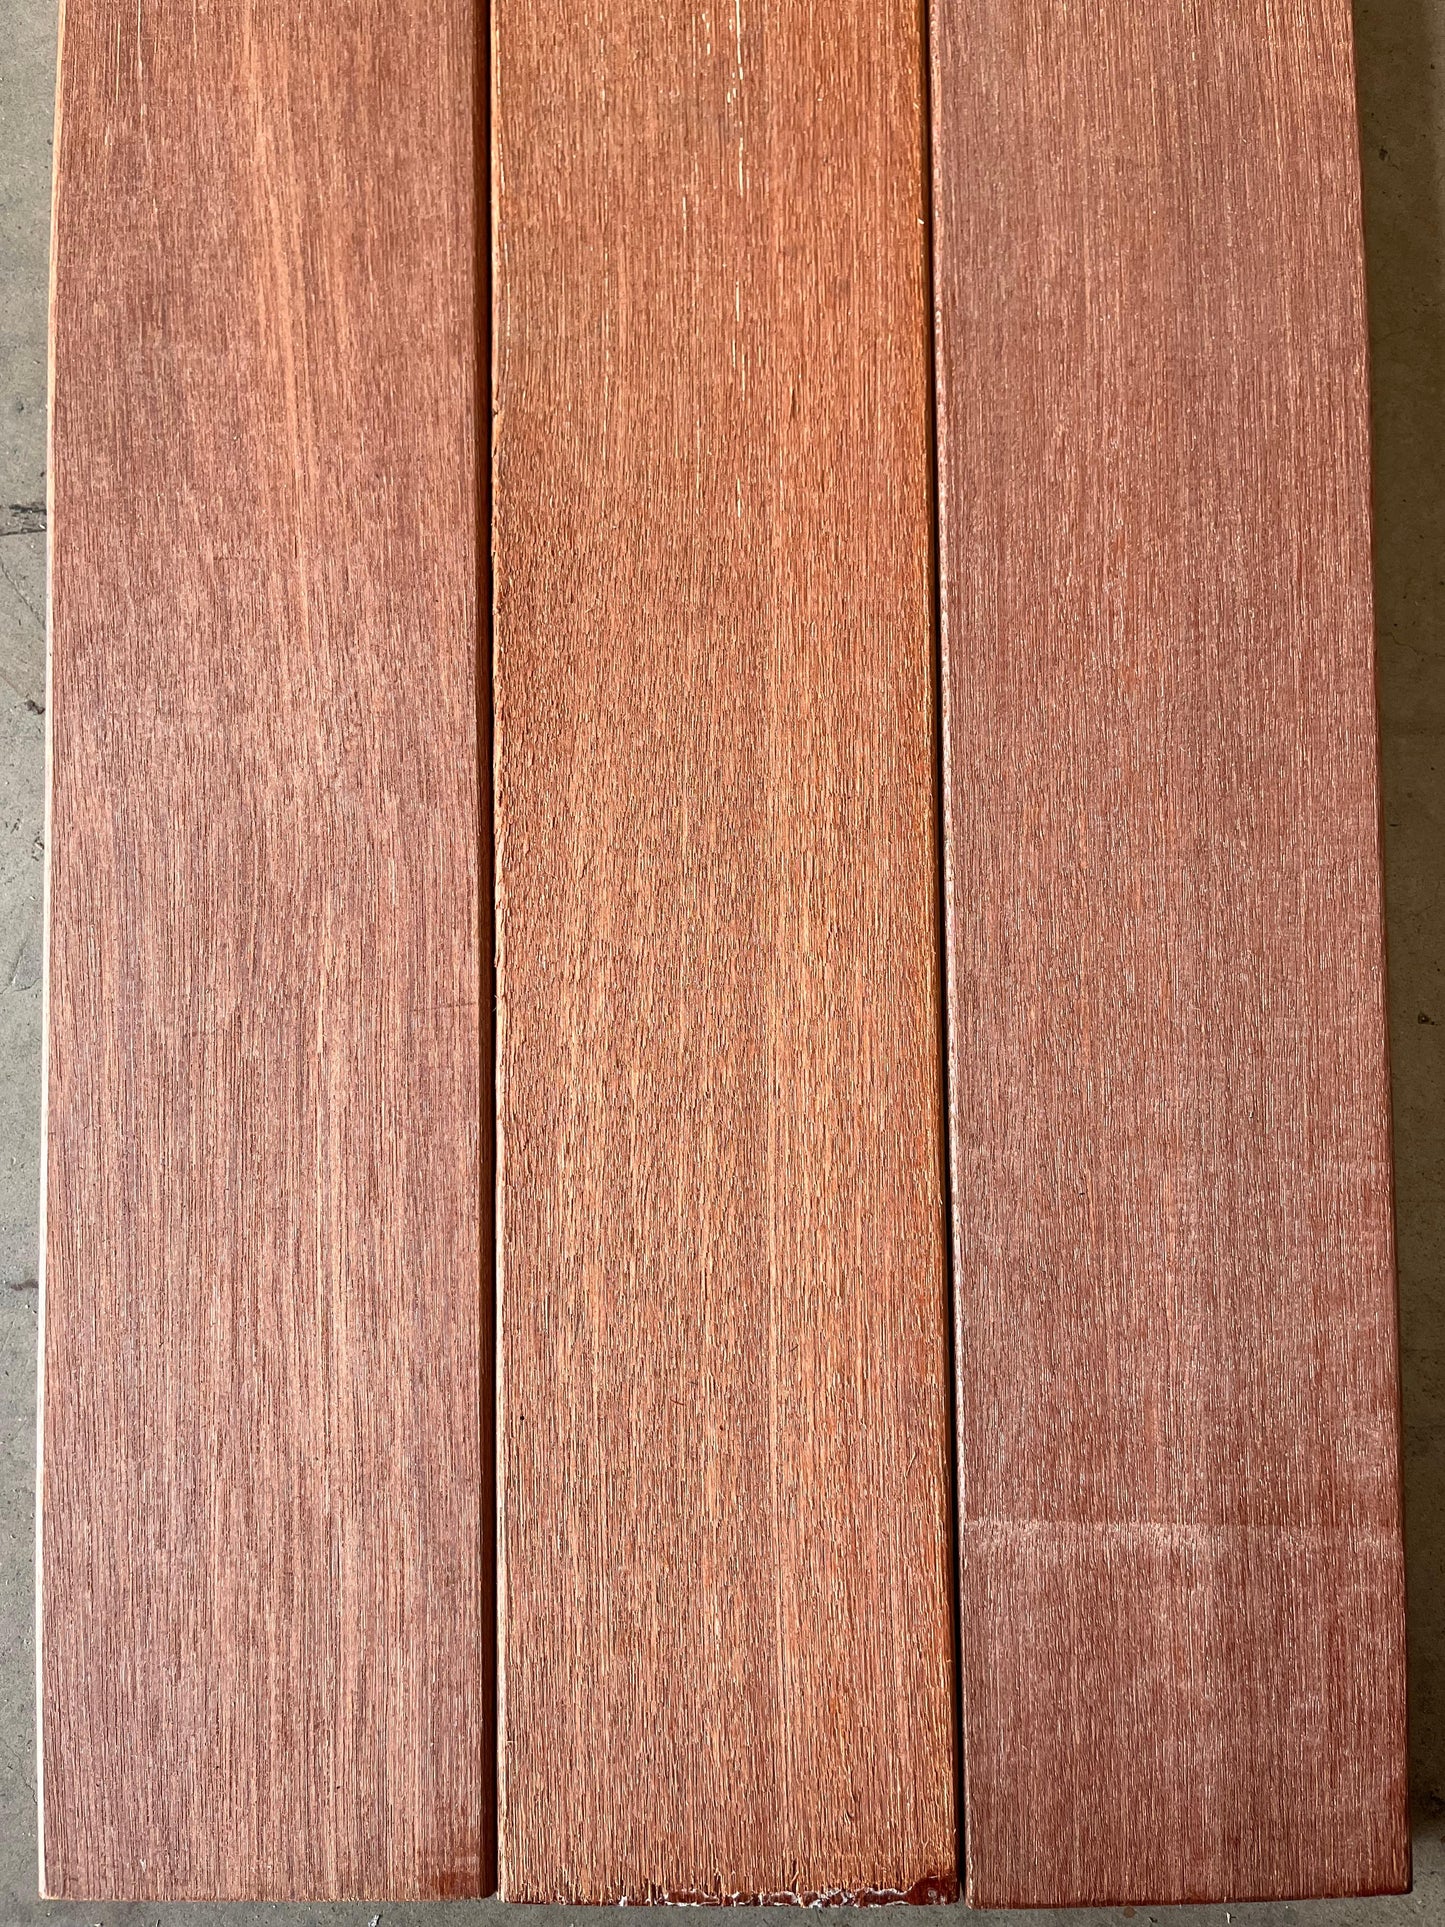 Pacific Red Hardwood Decking (Price Per Linear Meter)